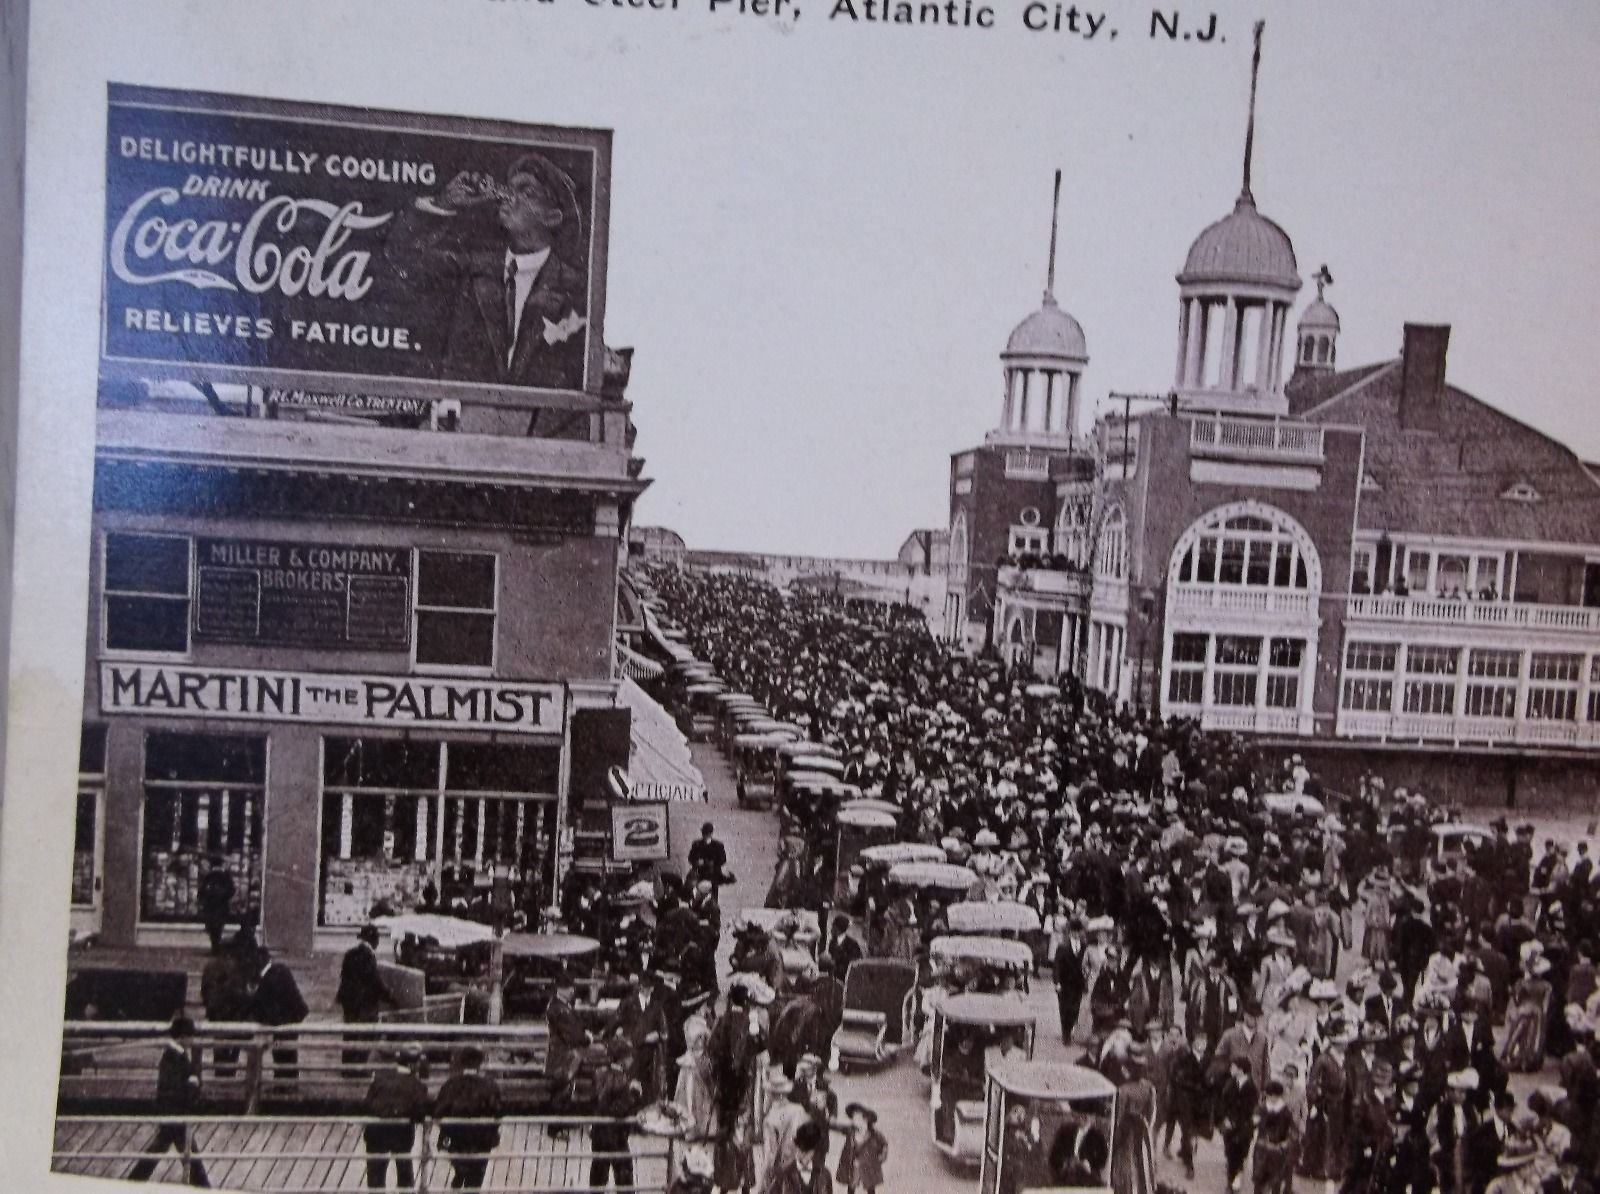 Atlantic City - The Boardwalk in all its glory